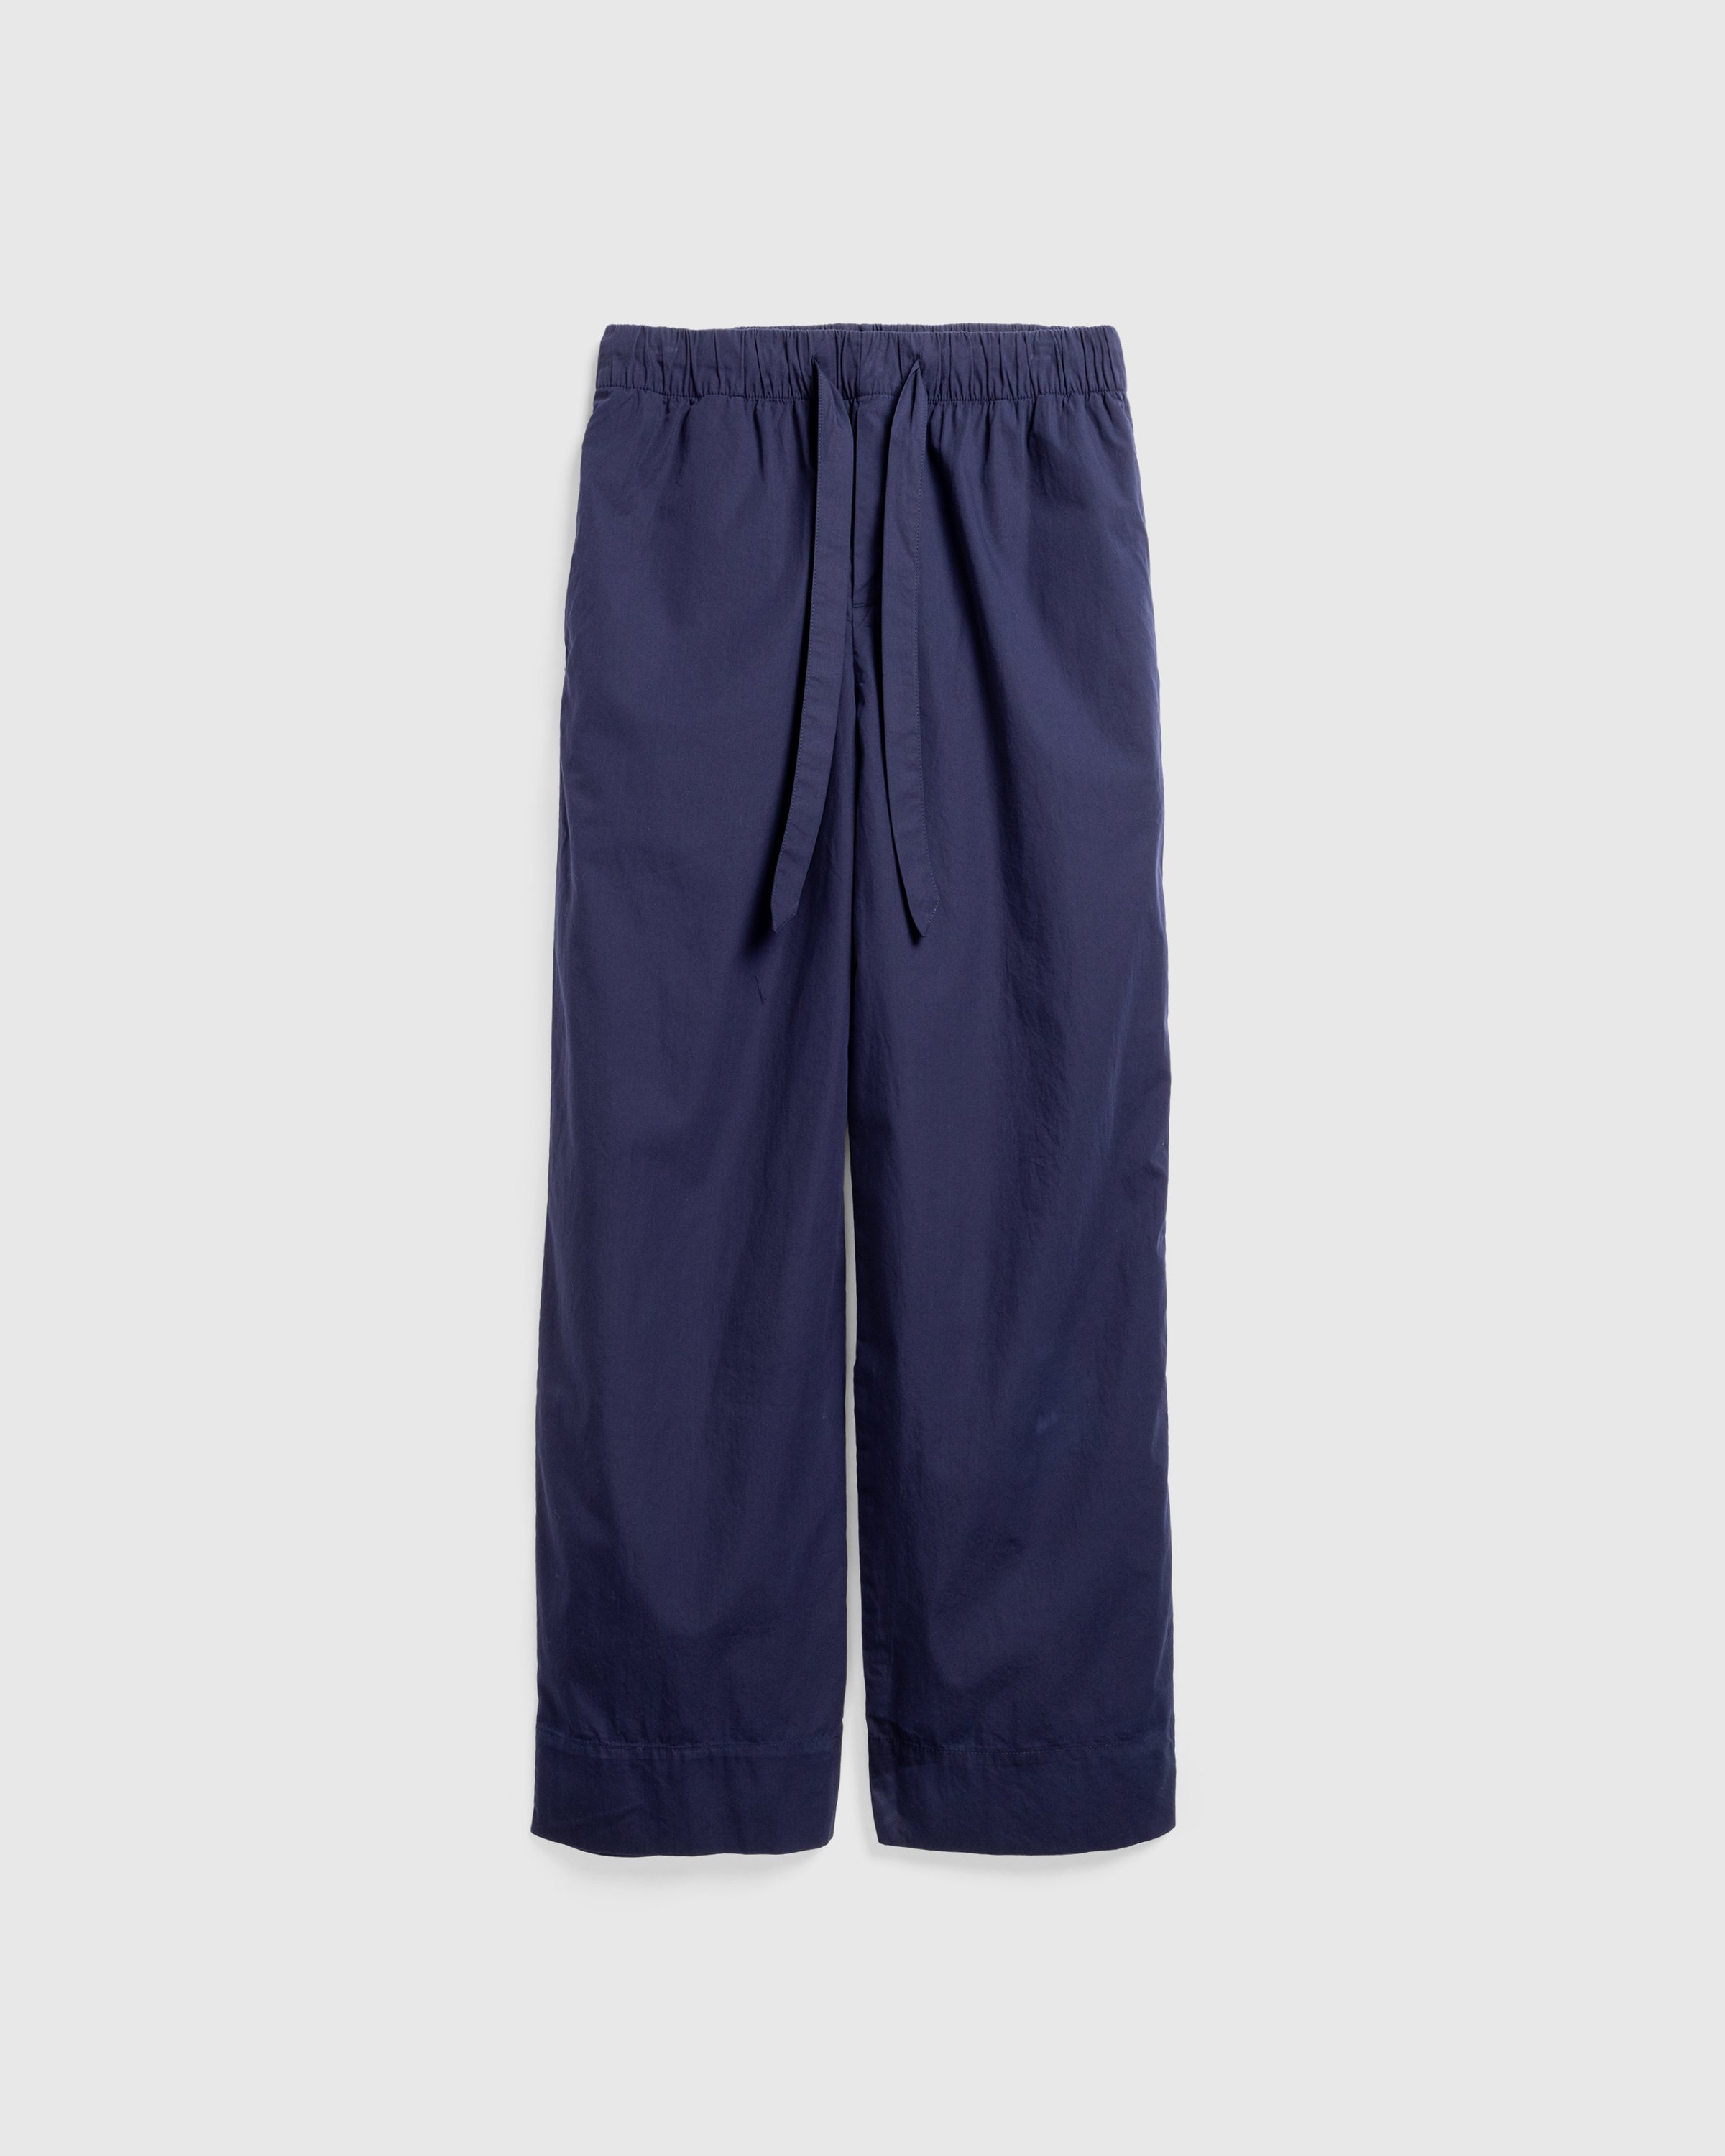 Tekla - Cotton Poplin - Pyjamas Pants True Navy - Clothing - Blue - Image 1